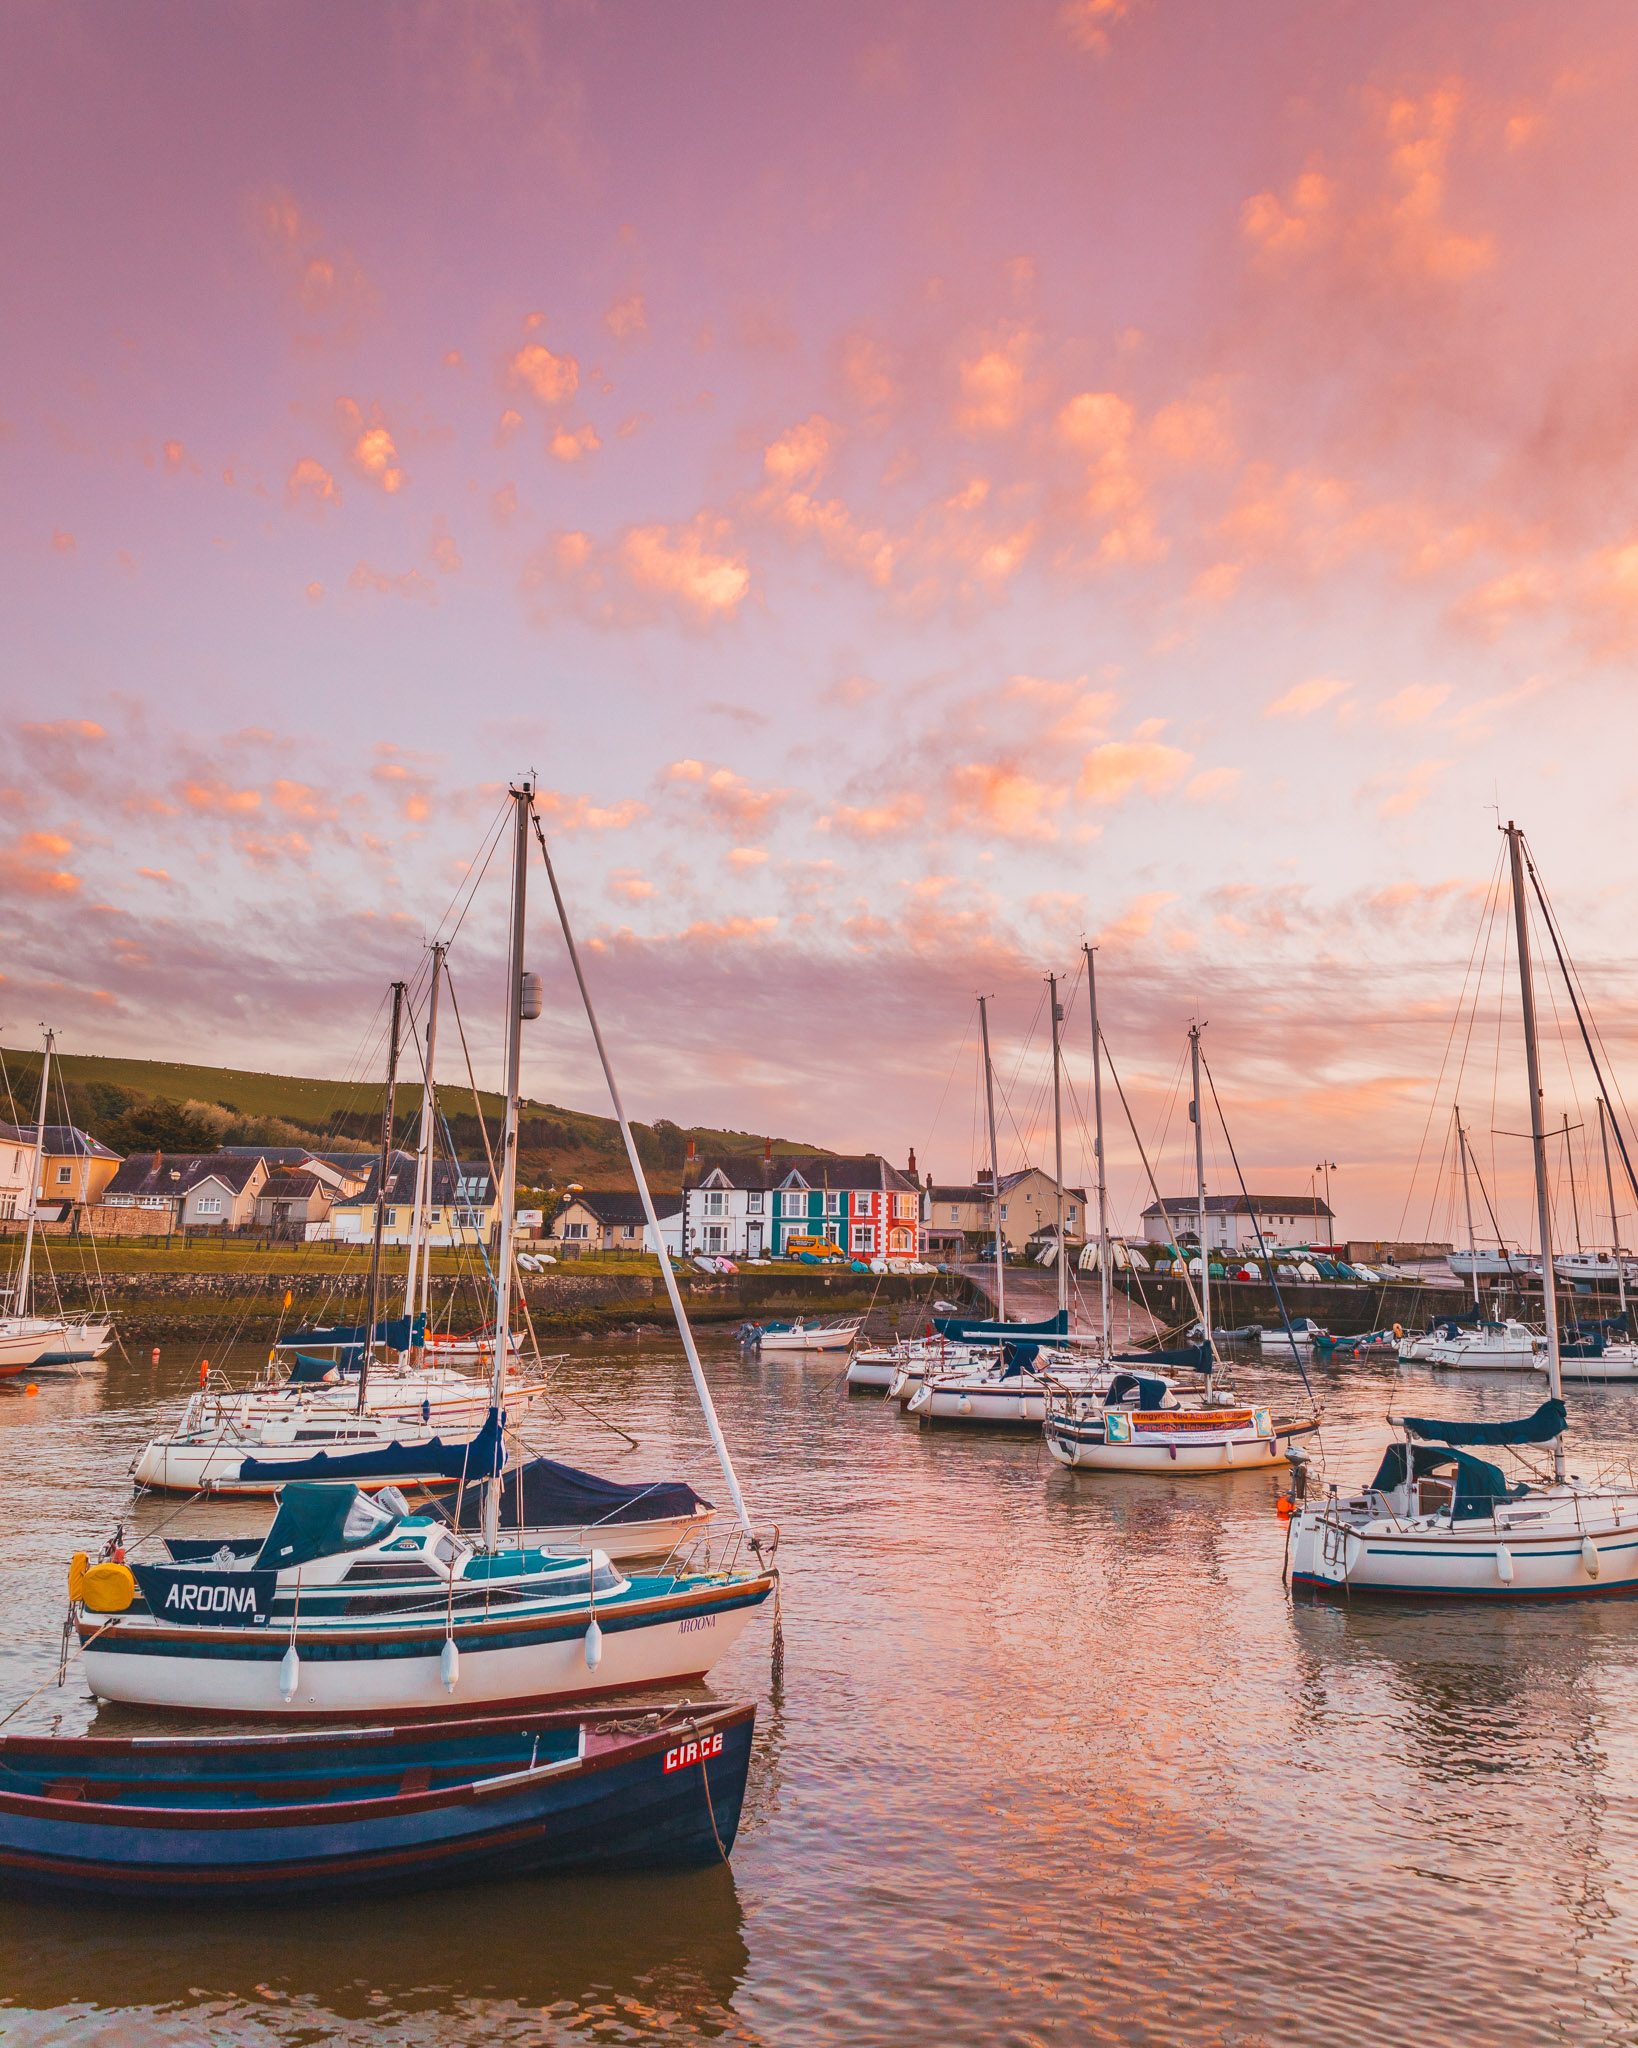 Aberaeron harbour sunset // The Most Beautiful Places to Visit in Wales // #readysetjetset #wales #uk #welsh #travel #photospots #blogpost